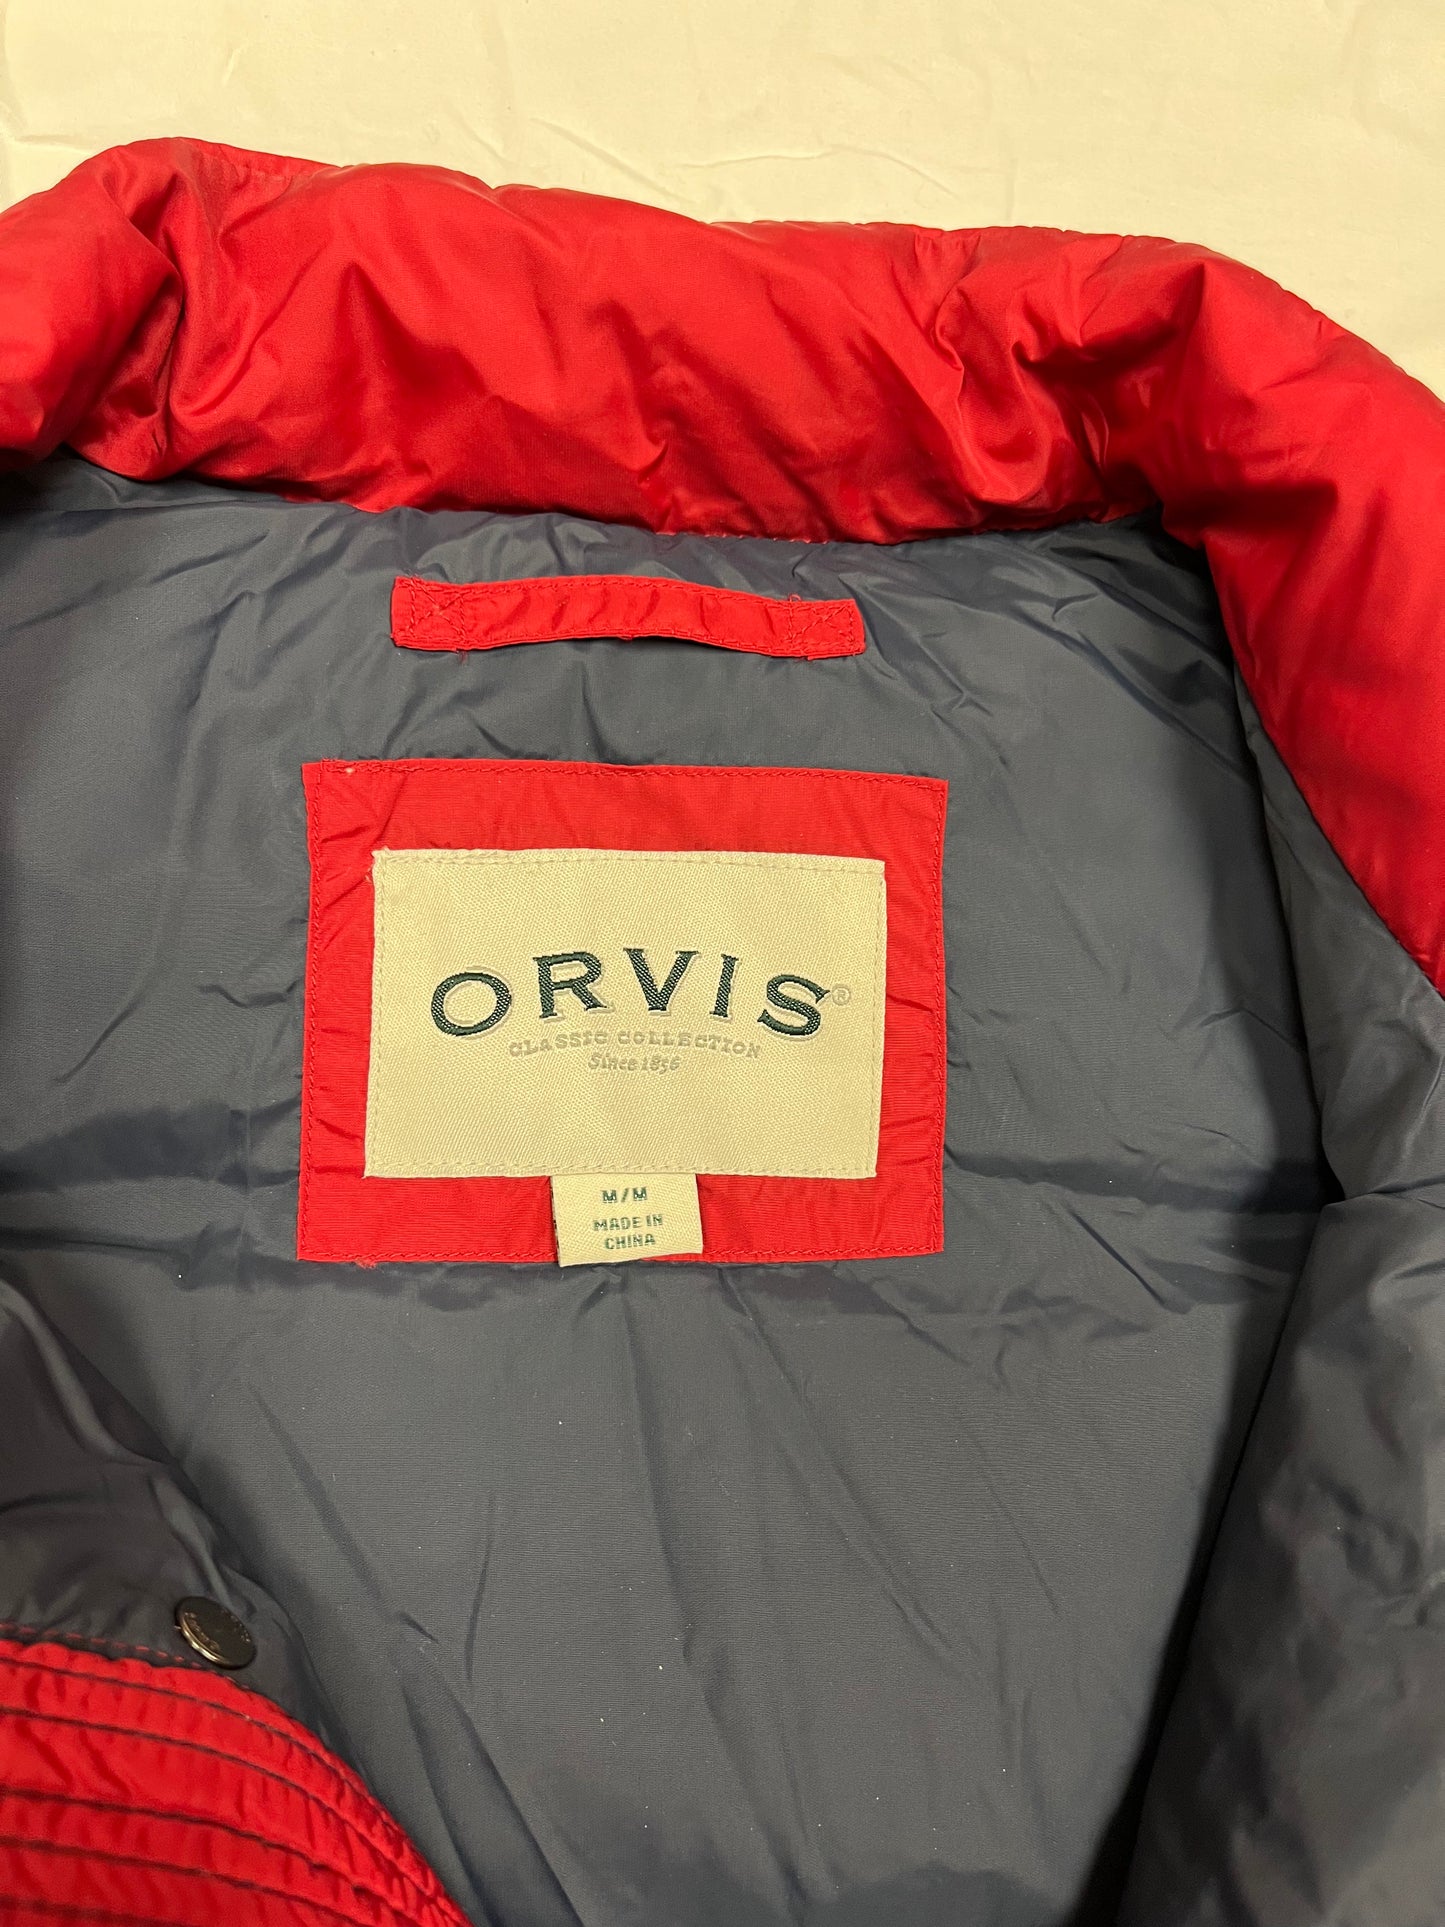 Orvis Essex Men's Red Down Filled Puffer Vest, M